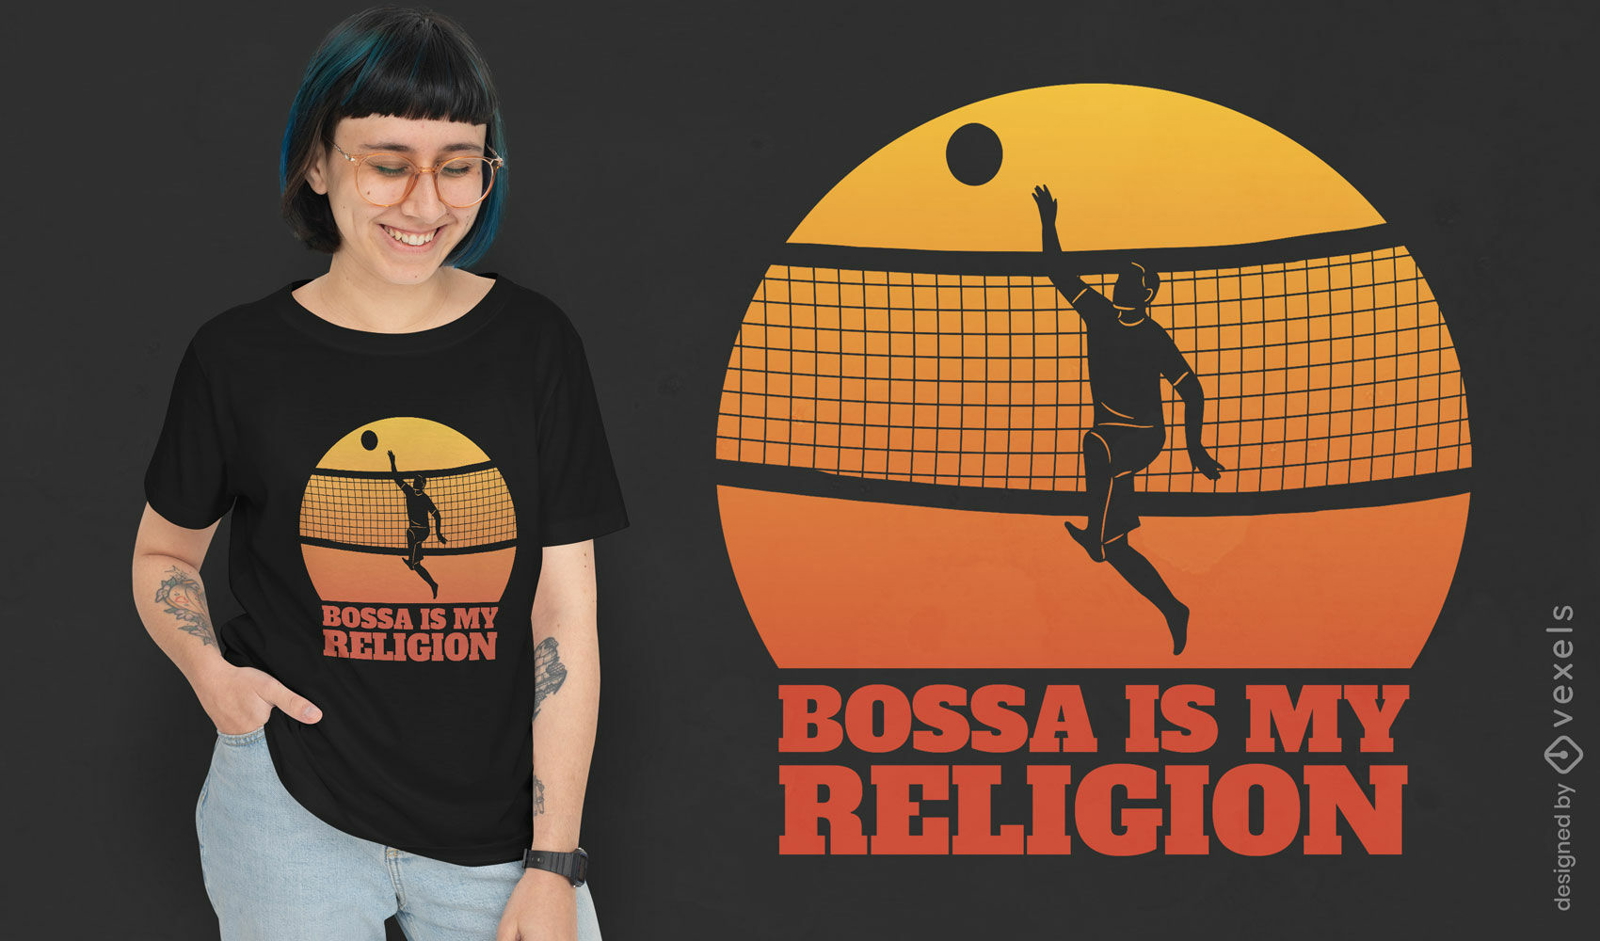 Bossaball ist mein Religions-T-Shirt-Design